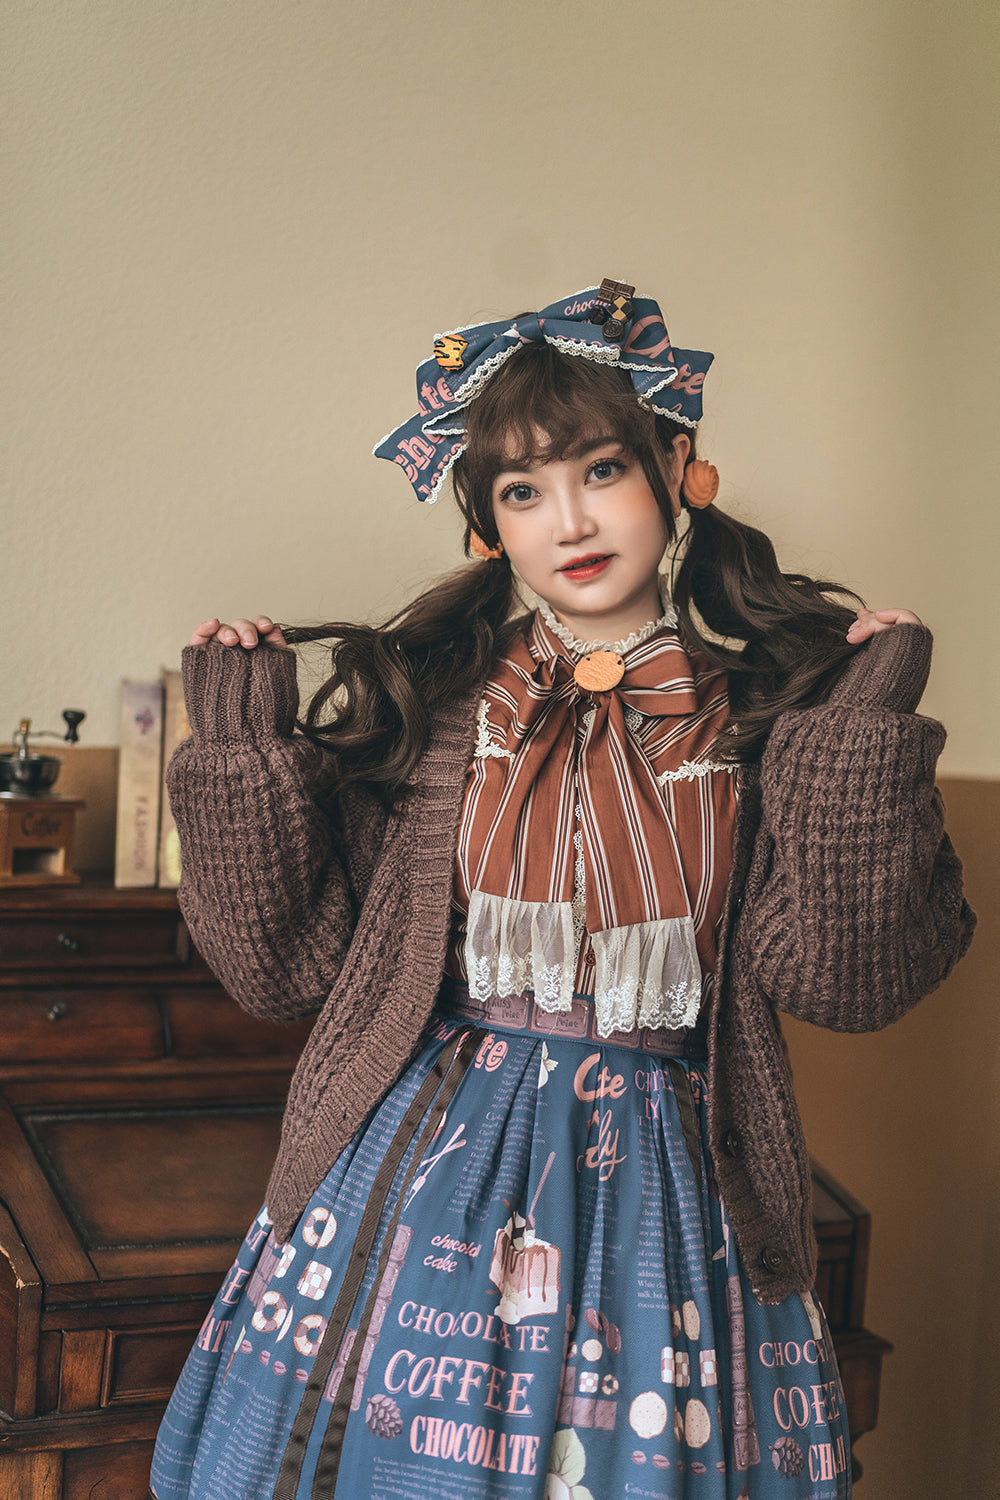 Miss Point~Little Becca~Twist Stick Knitted Lolita Sweater Cardigan   